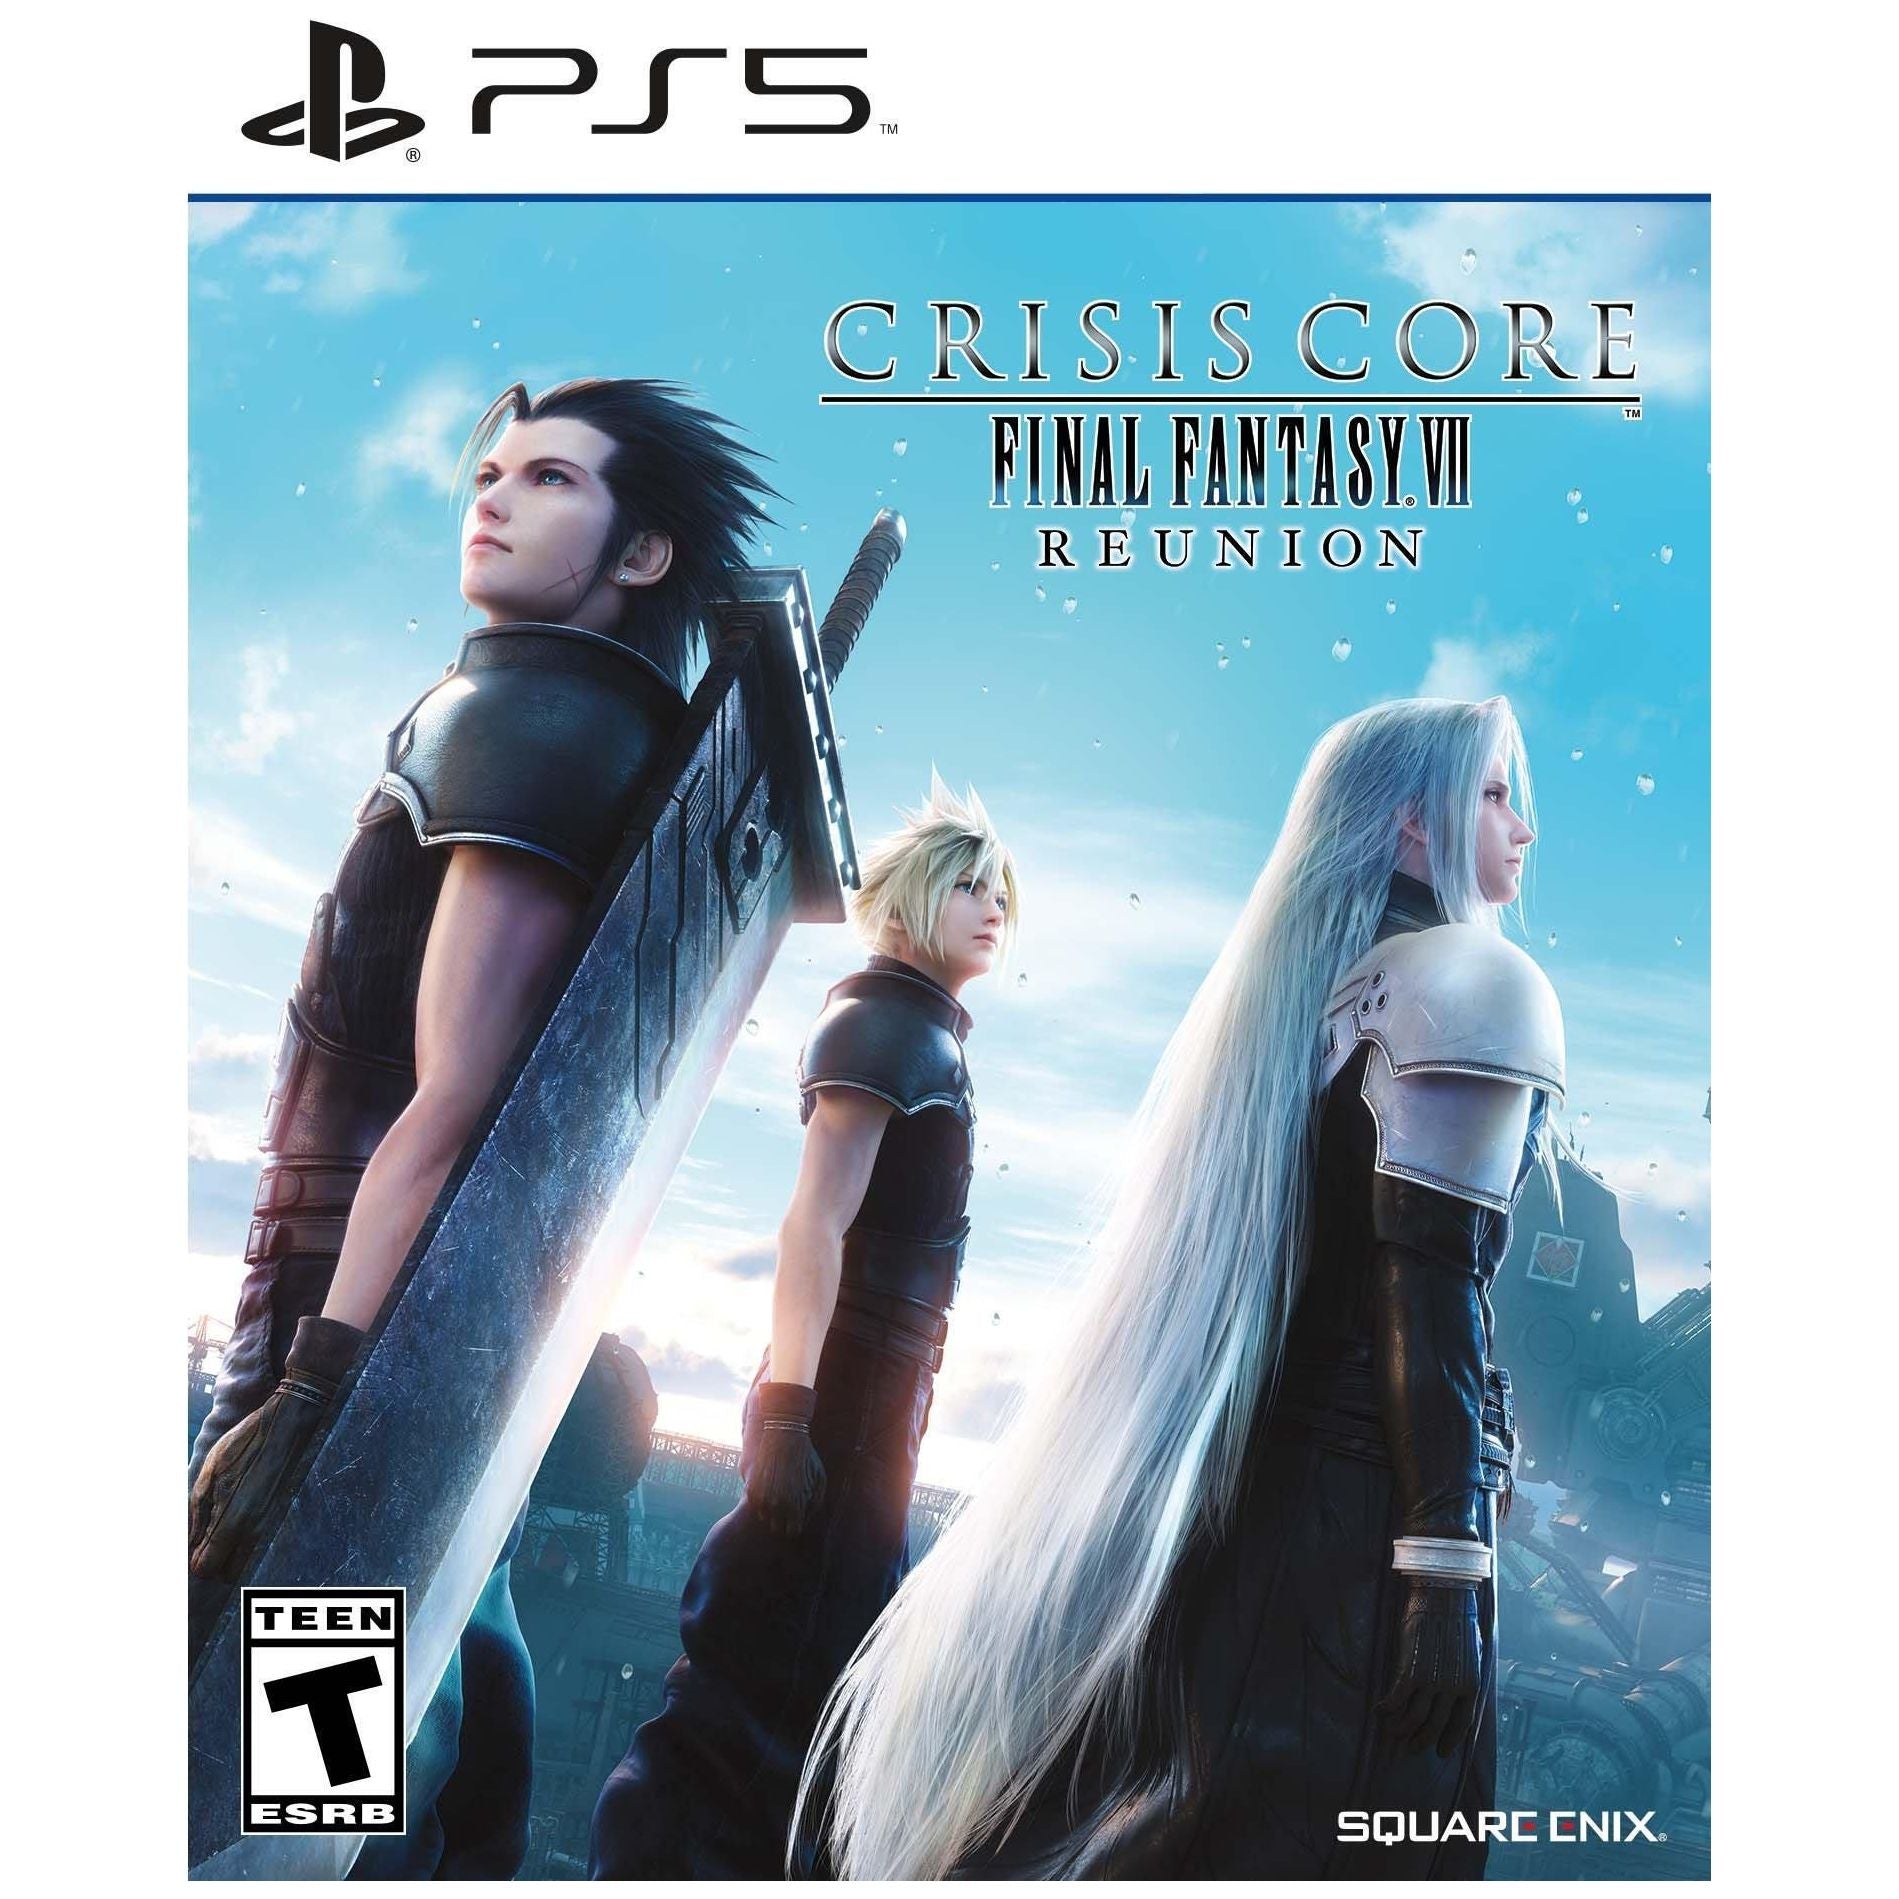 PS5 - Crisis Core Final Fantasy VII Reunion